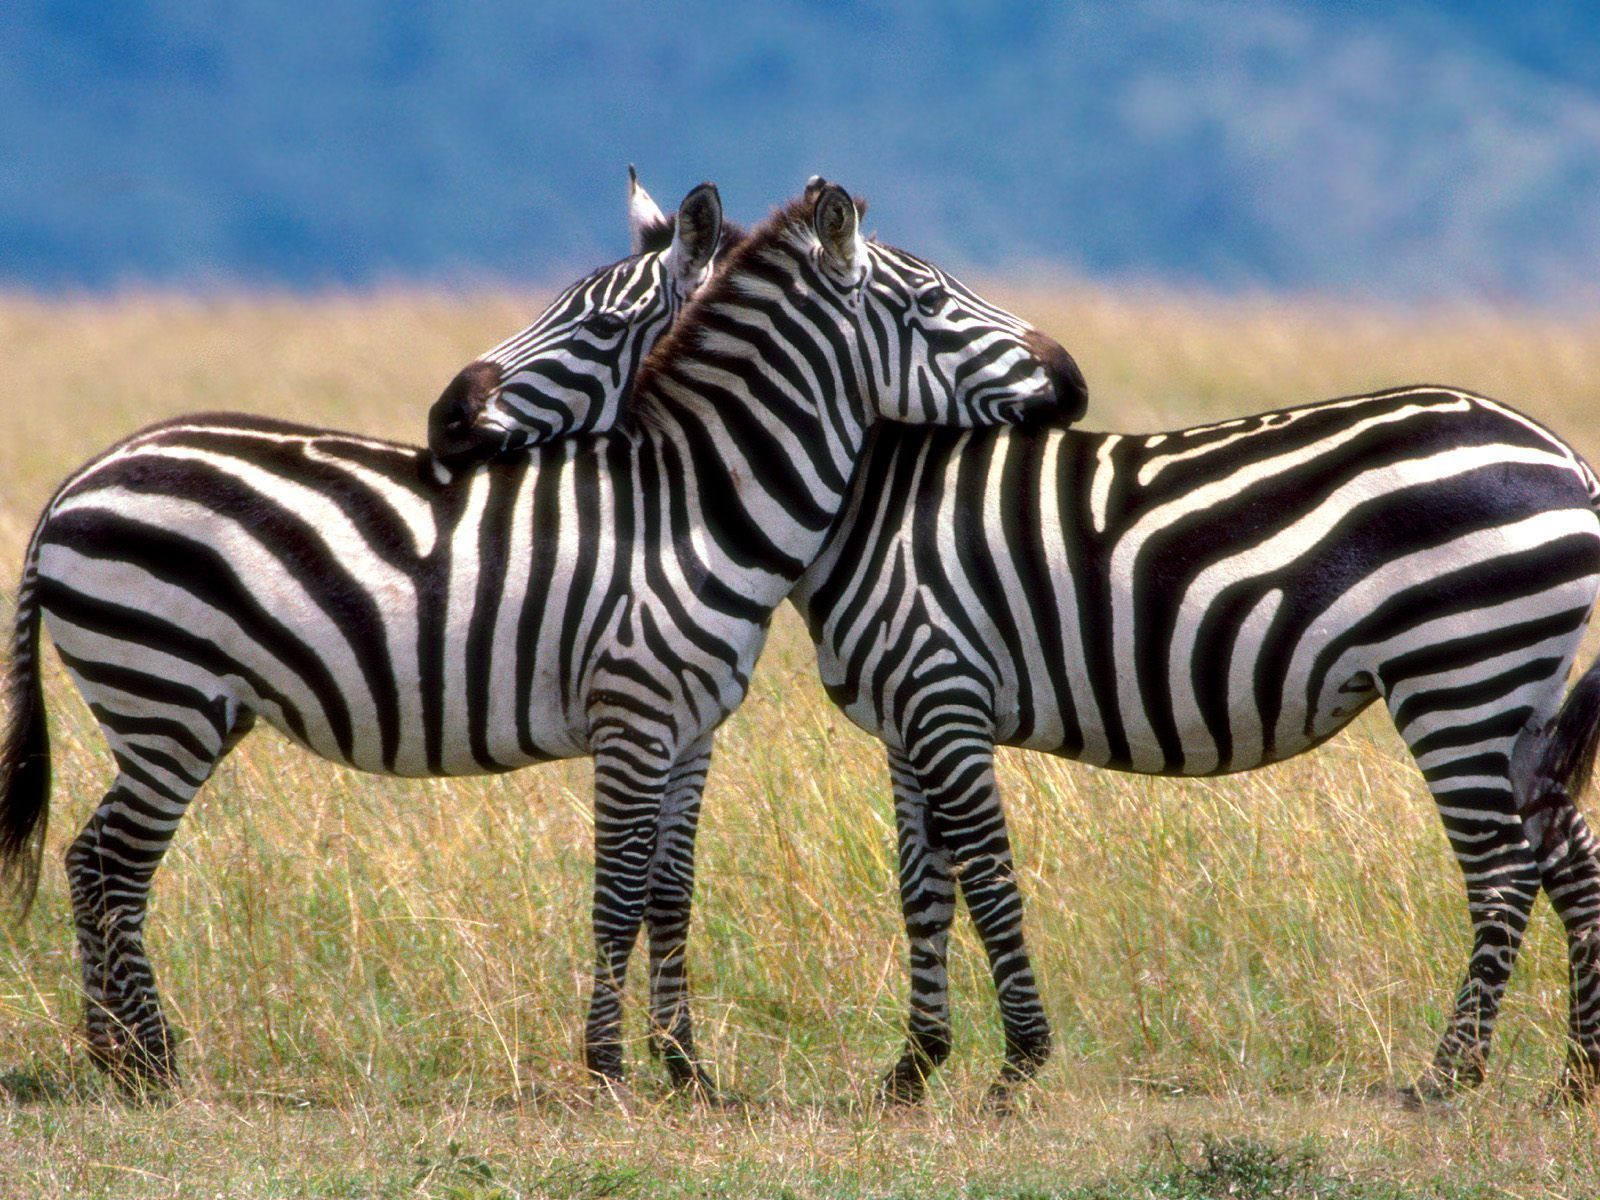 standing together ( #zebras #wildlife #animals ) ✌eace | H U M A N ...